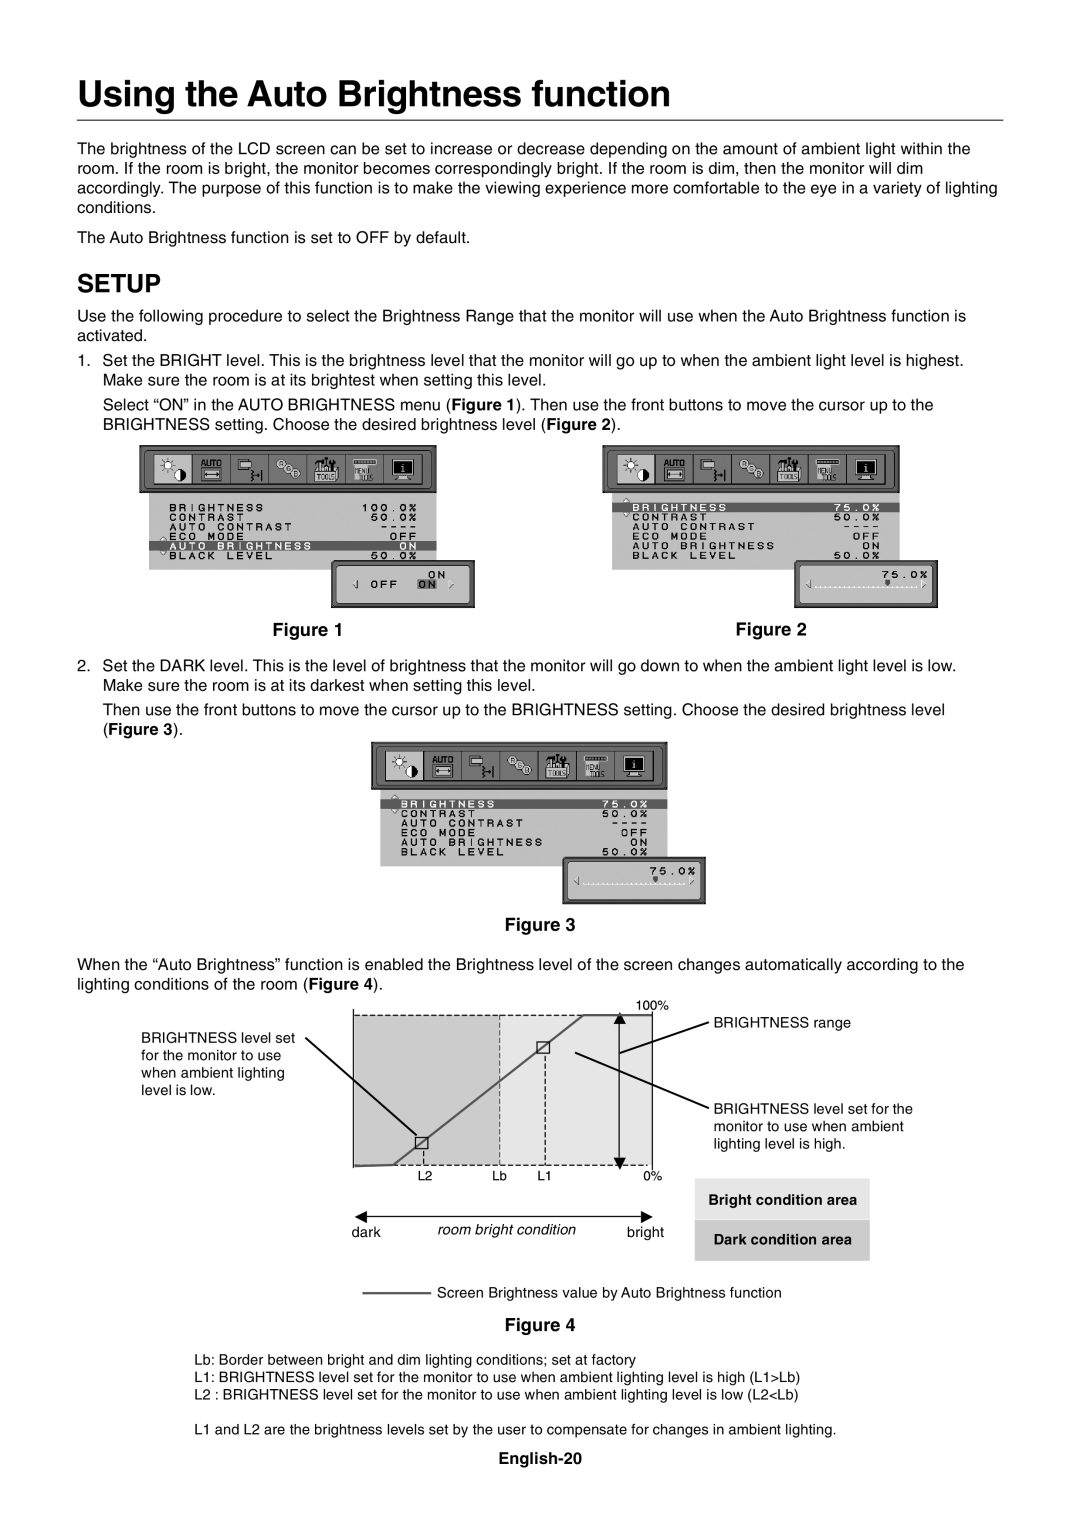 NEC LCD1990FXp user manual Using the Auto Brightness function, Setup 